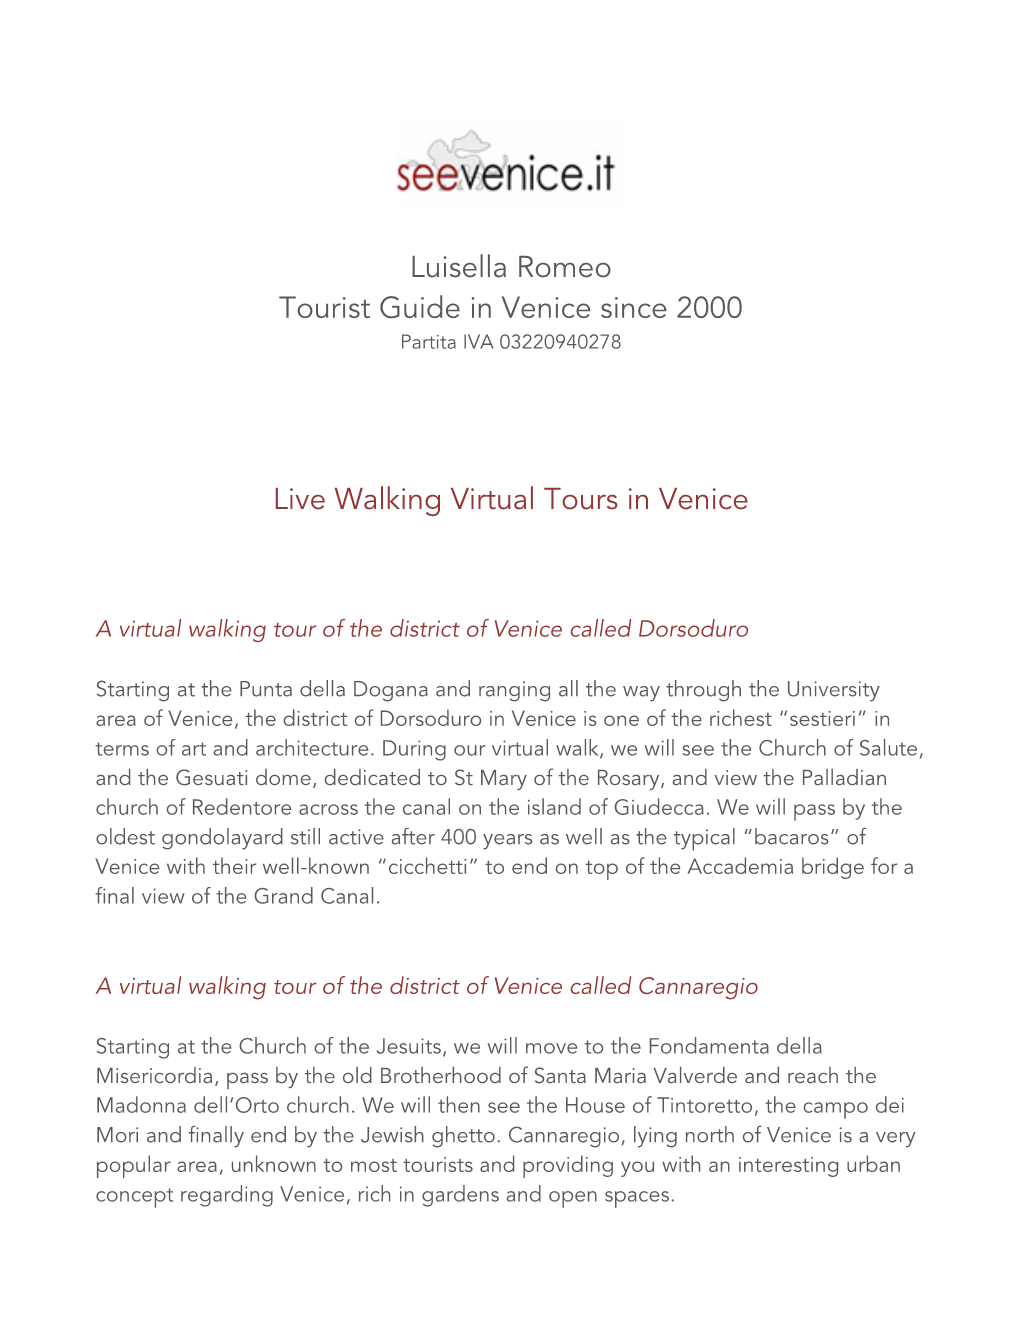 Luisella Romeo Tourist Guide in Venice Since 2000 Live Walking